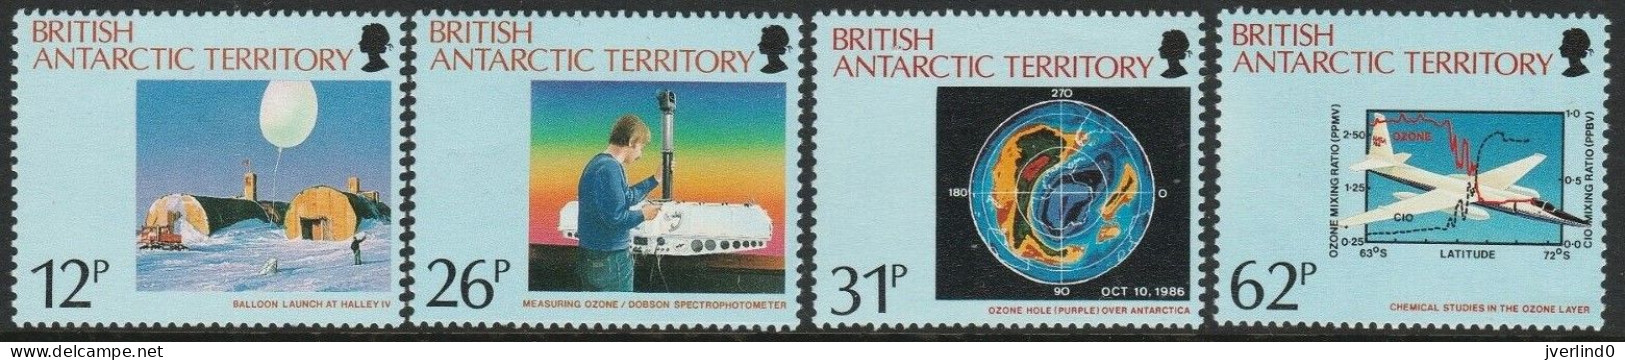 British Antarctic Territory 1991 Ozon Hole Complete Set MNH - Unused Stamps